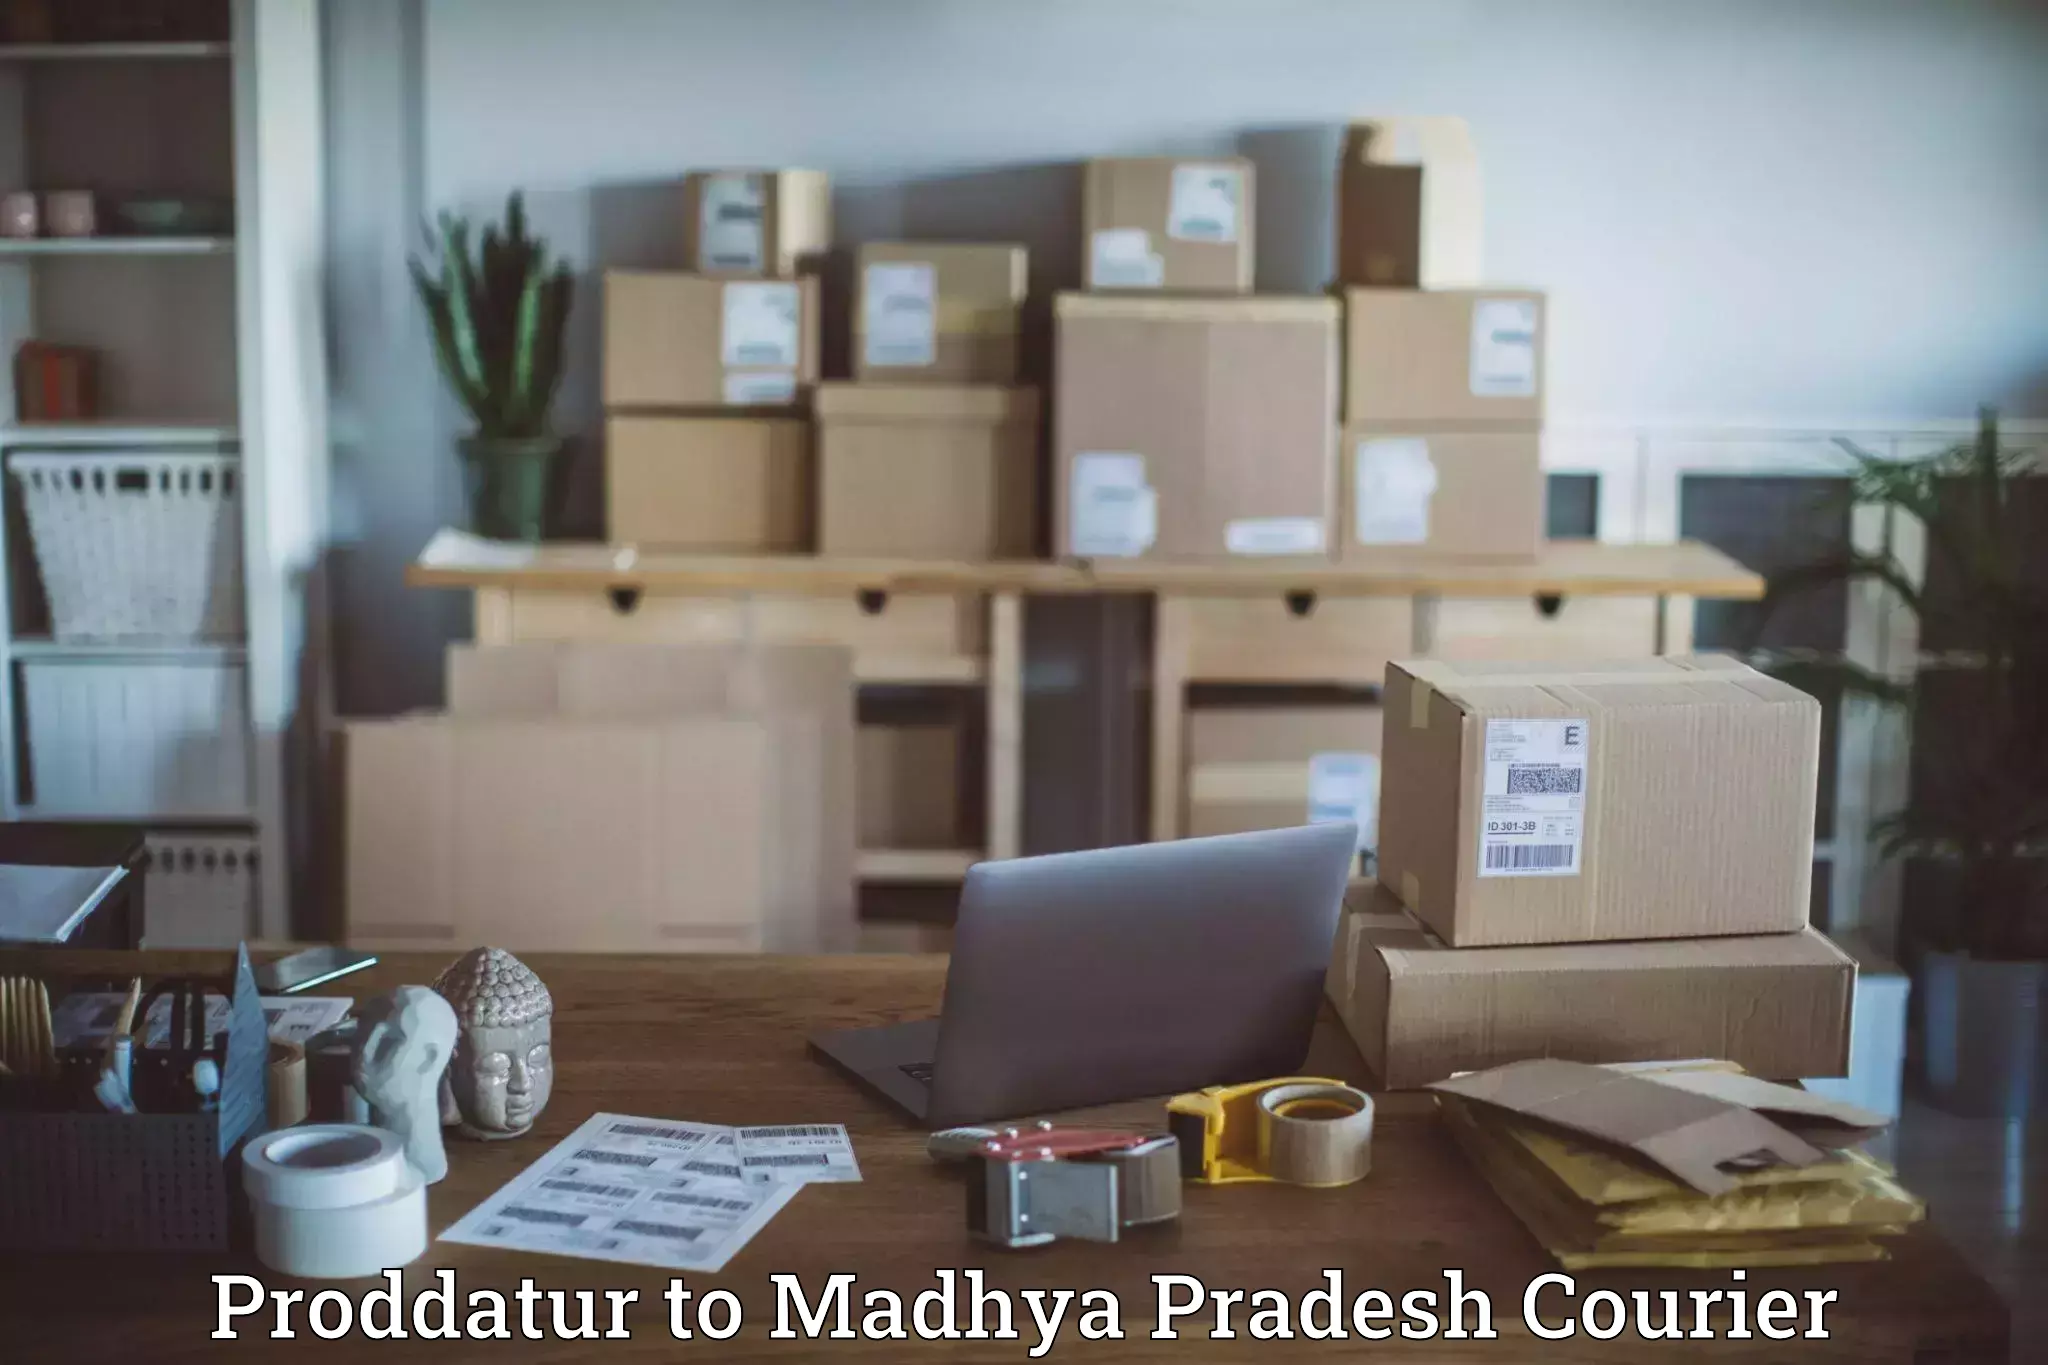 Global logistics network Proddatur to Madhya Pradesh